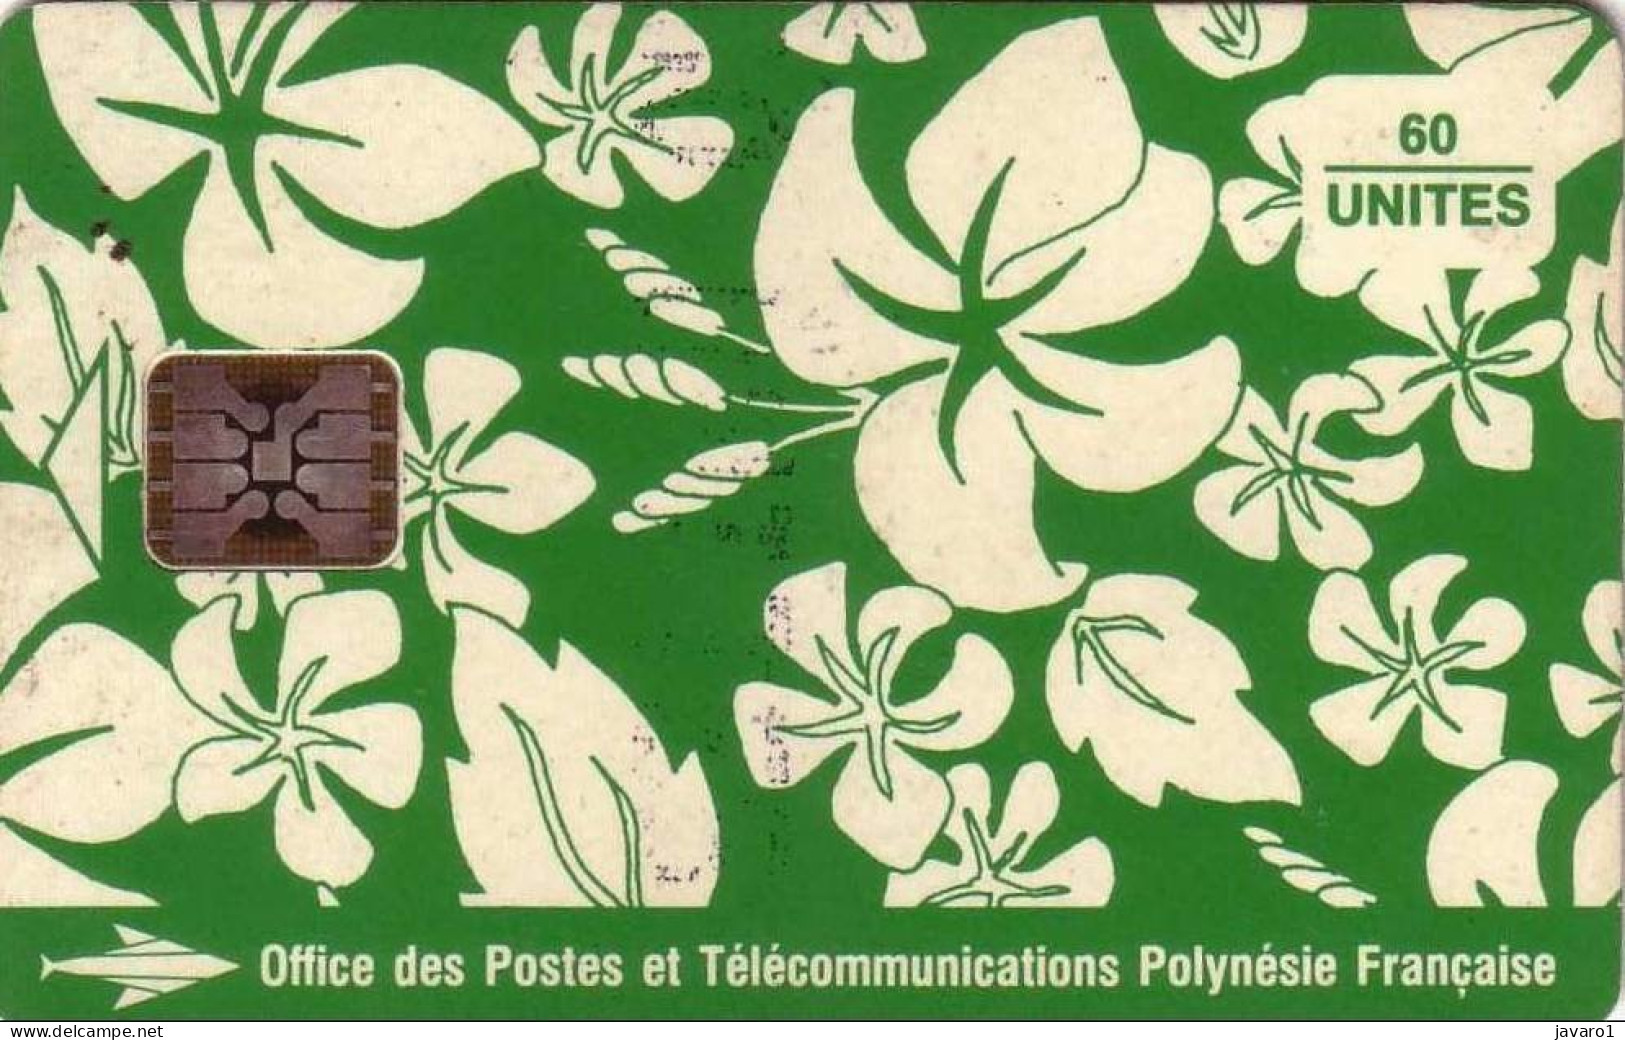 FR. POLYNESIA : FP018A  60 Motif Pareo, S. Millecamps 1993 (green) ( Batch: C41043823) USED - Polynésie Française